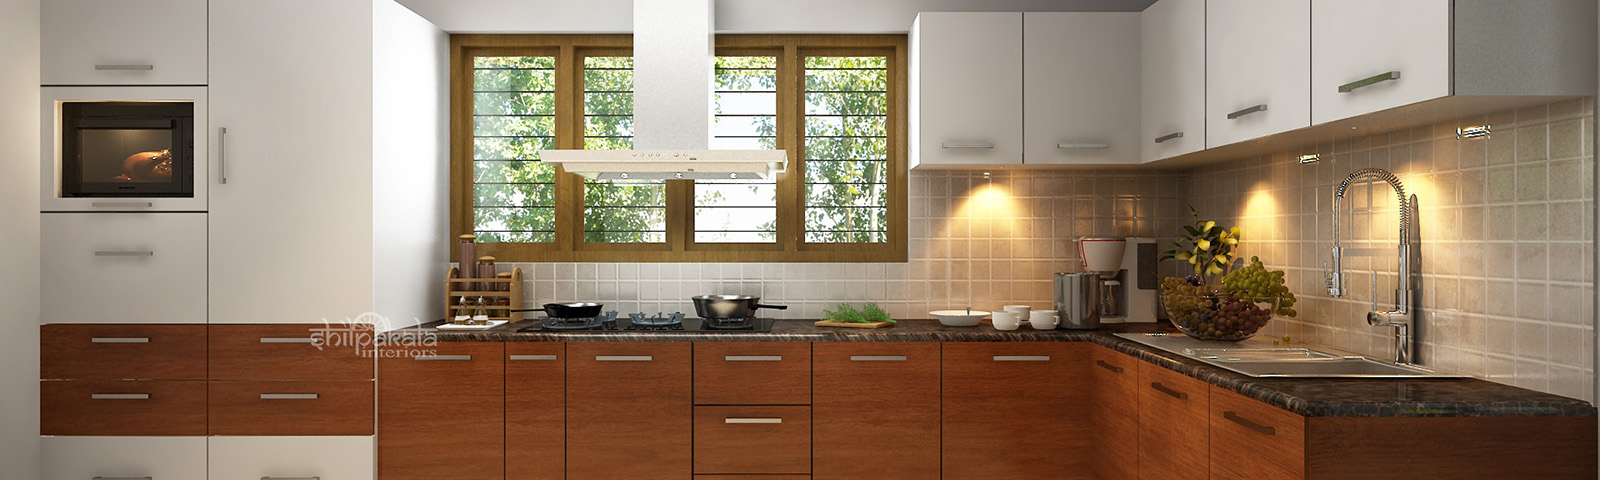 Modular Kitchen Cabinets In Kerala | Kitchen Interior Designing